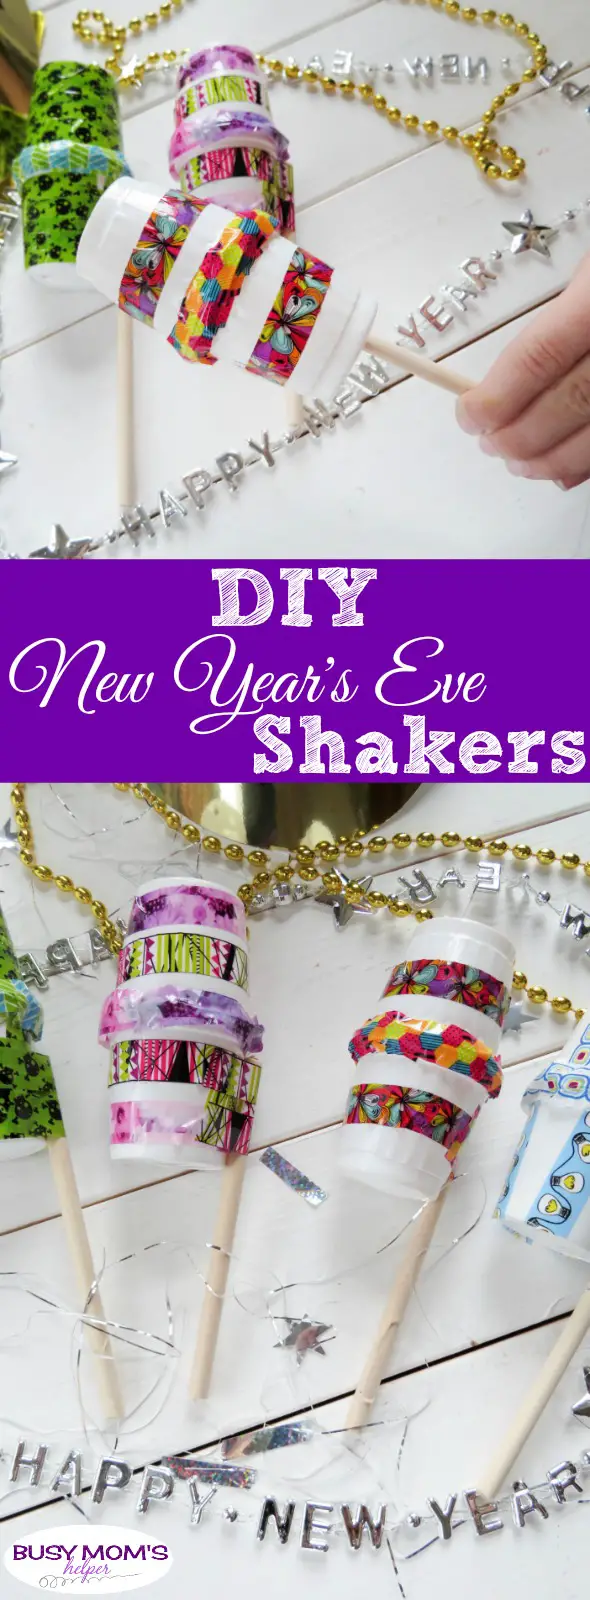 DIY New Year's Eve Shakers #newyears #newyear2019 #diy #craft #kids #kidscraft #newyearsparty #parties